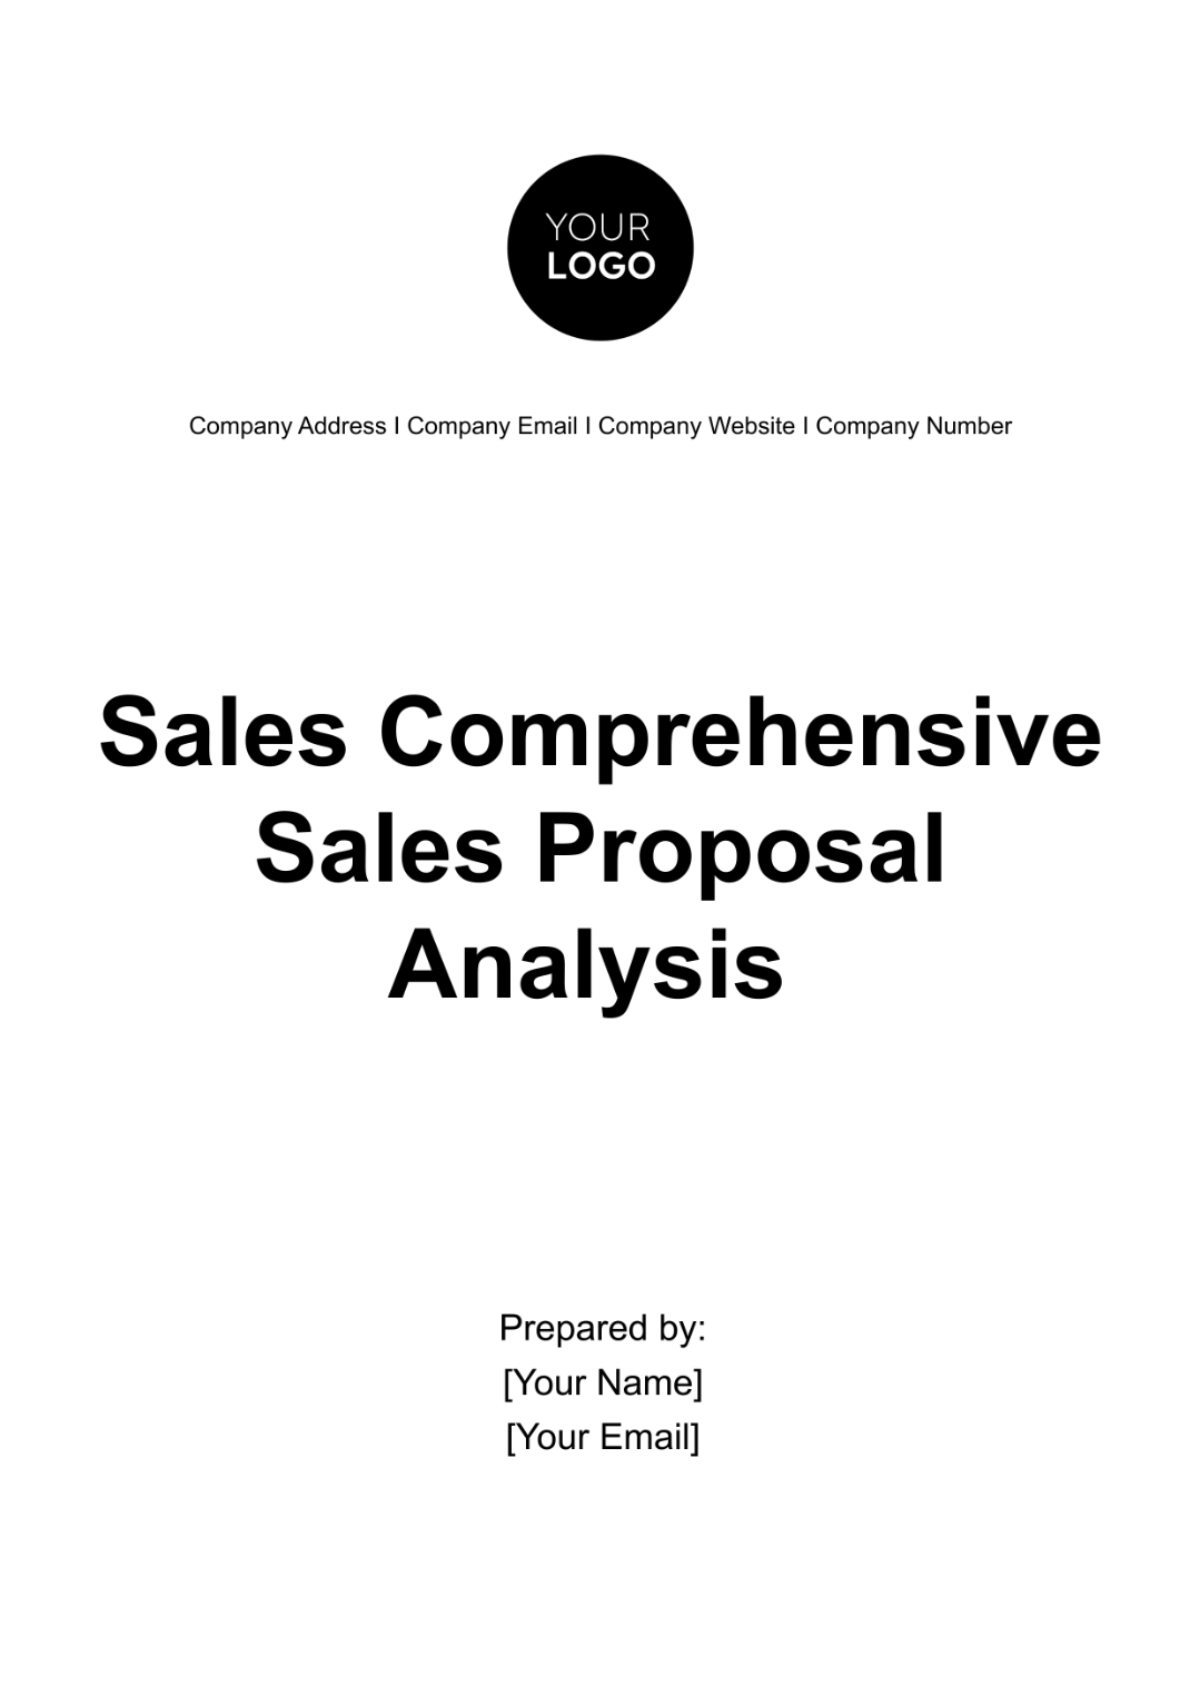 Sales Comprehensive Sales Proposal Analysis Template